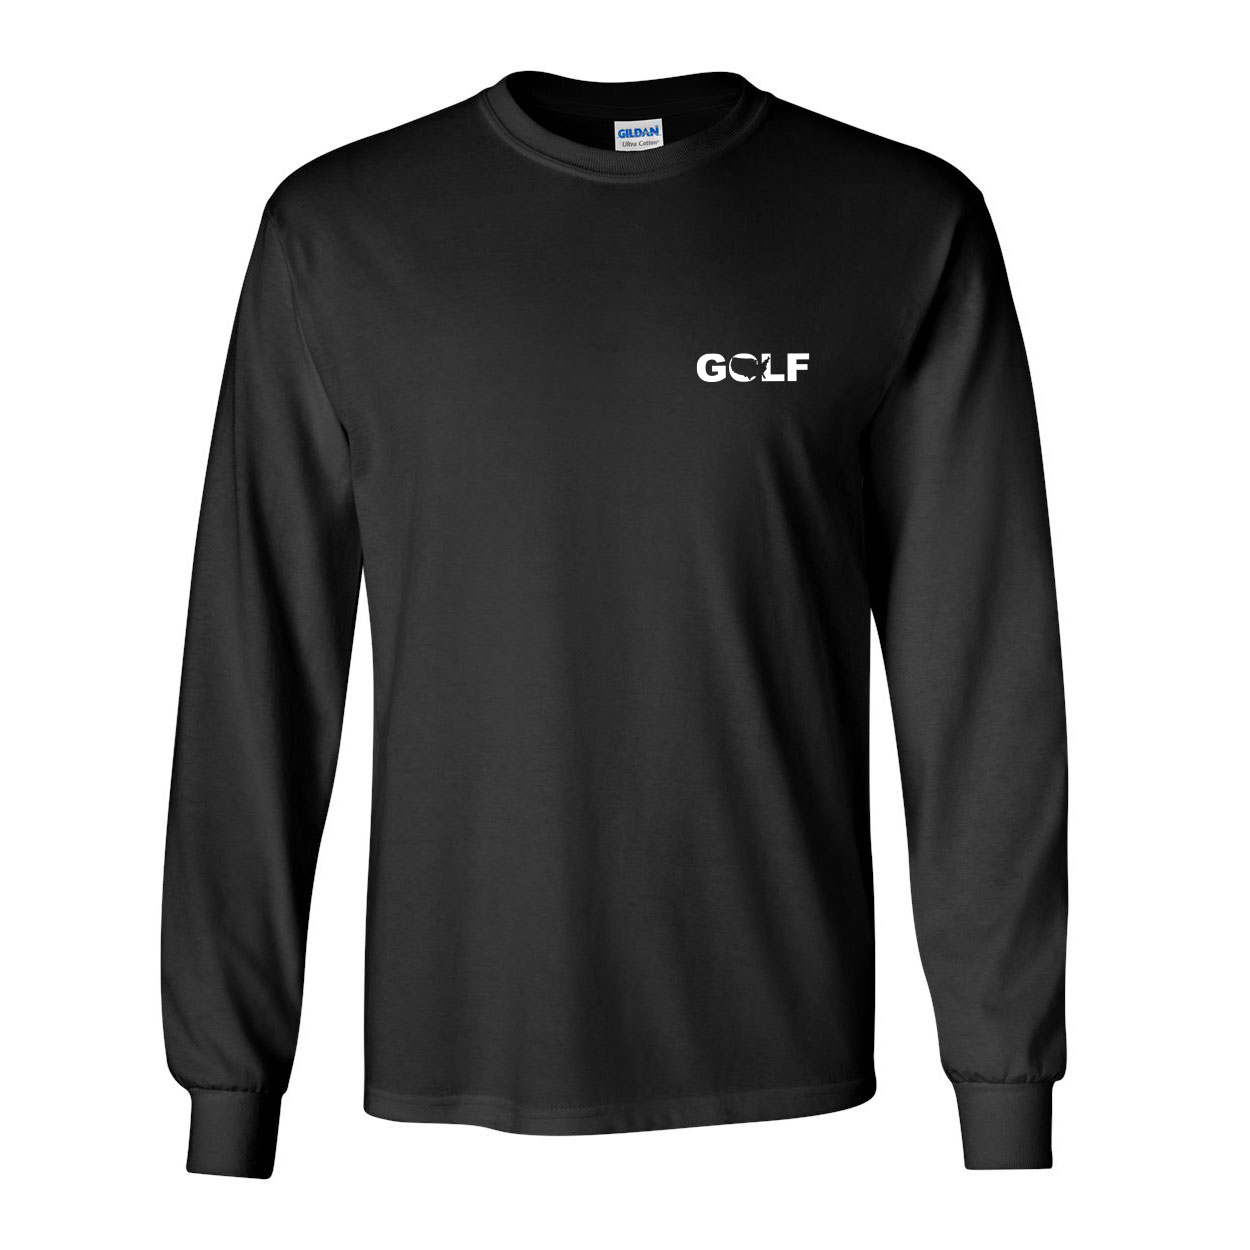 Golf United States Night Out Long Sleeve T-Shirt Black (White Logo)